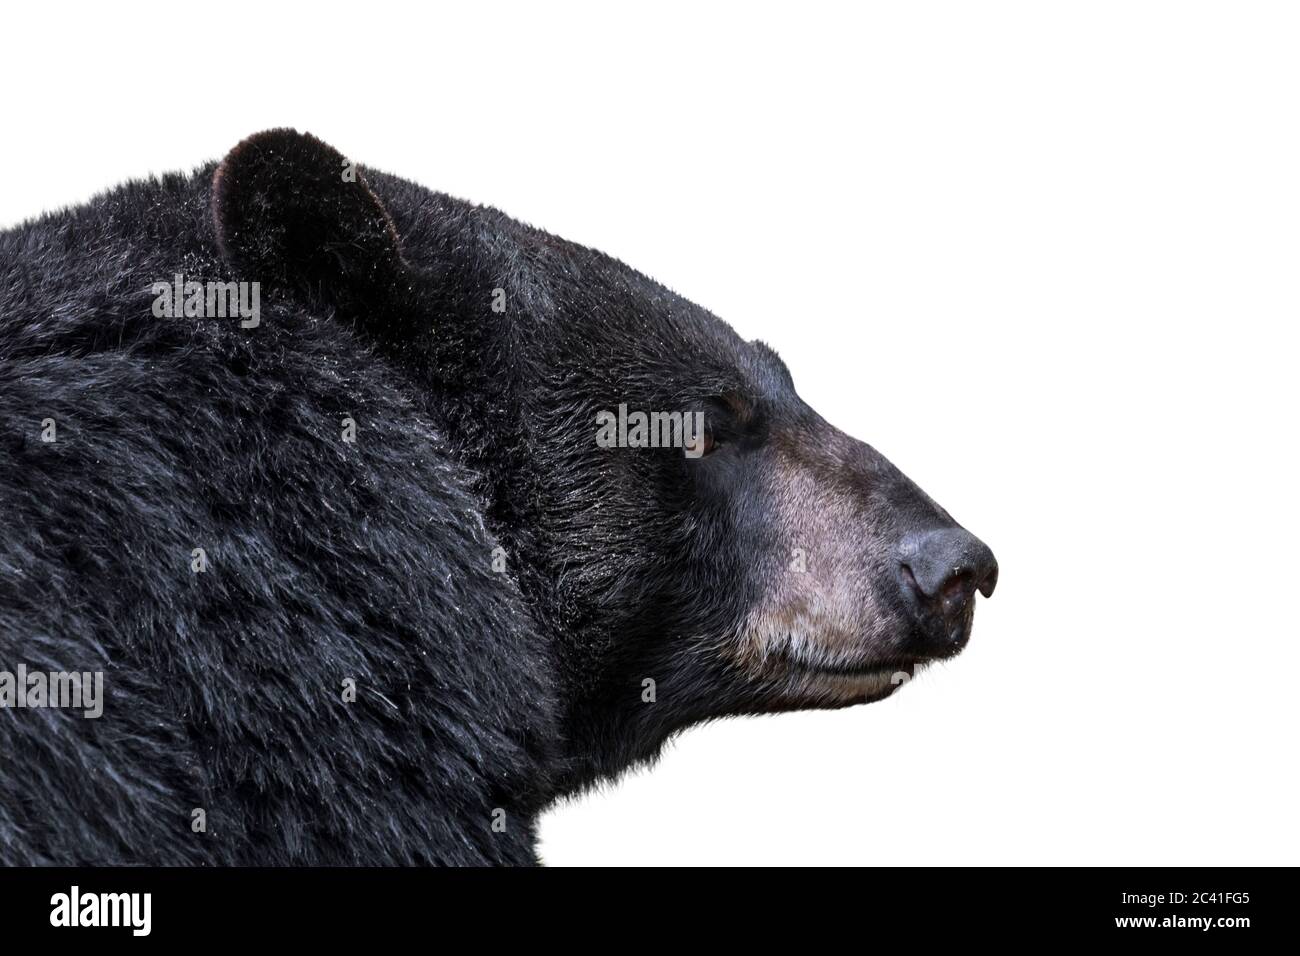 American black bear (Ursus americanus) close-up of head against white background Stock Photo